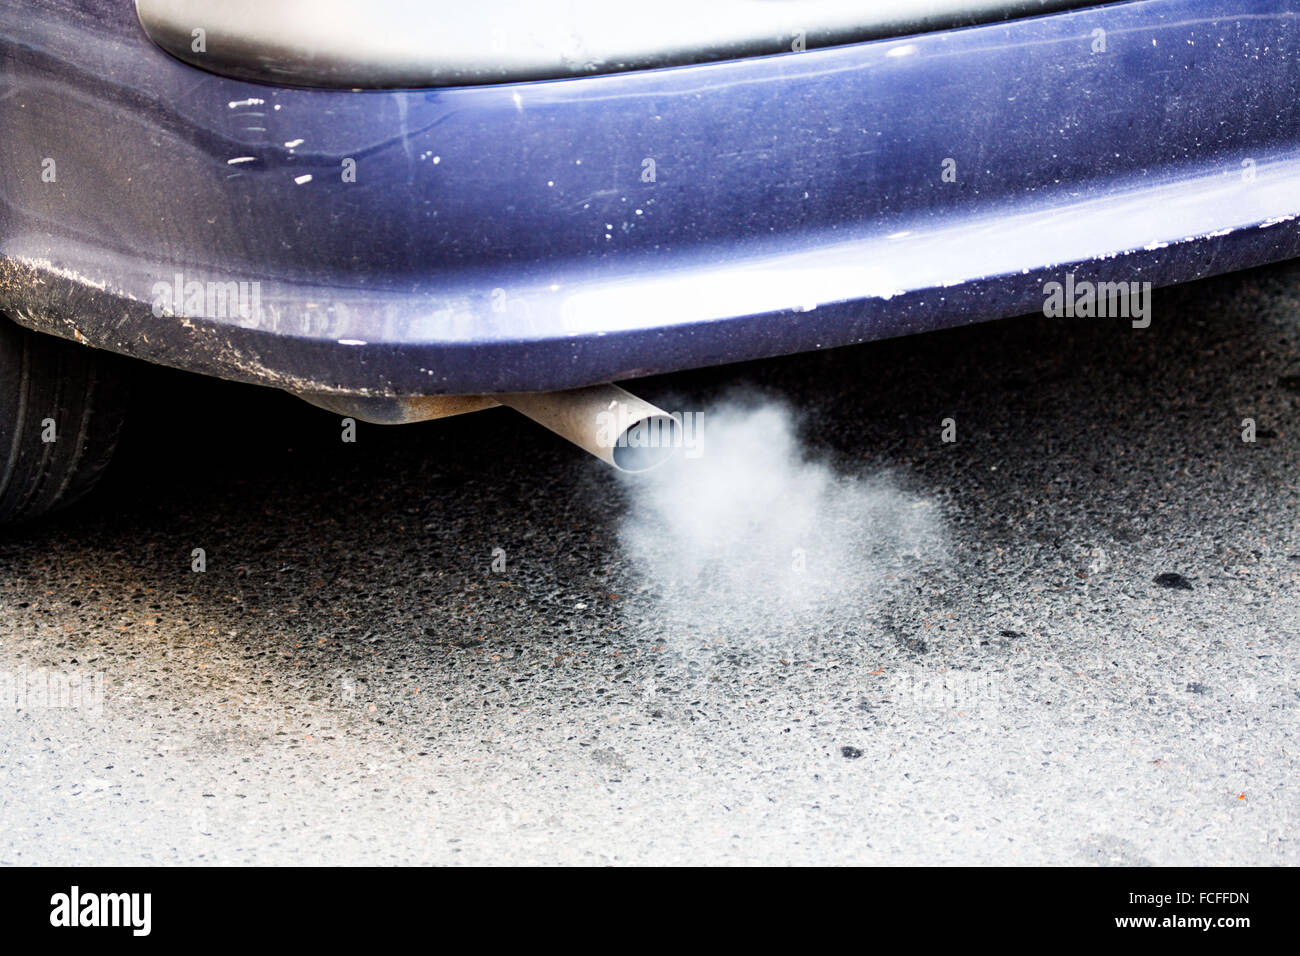 Motor vehicle exhaust gases. Stock Photo